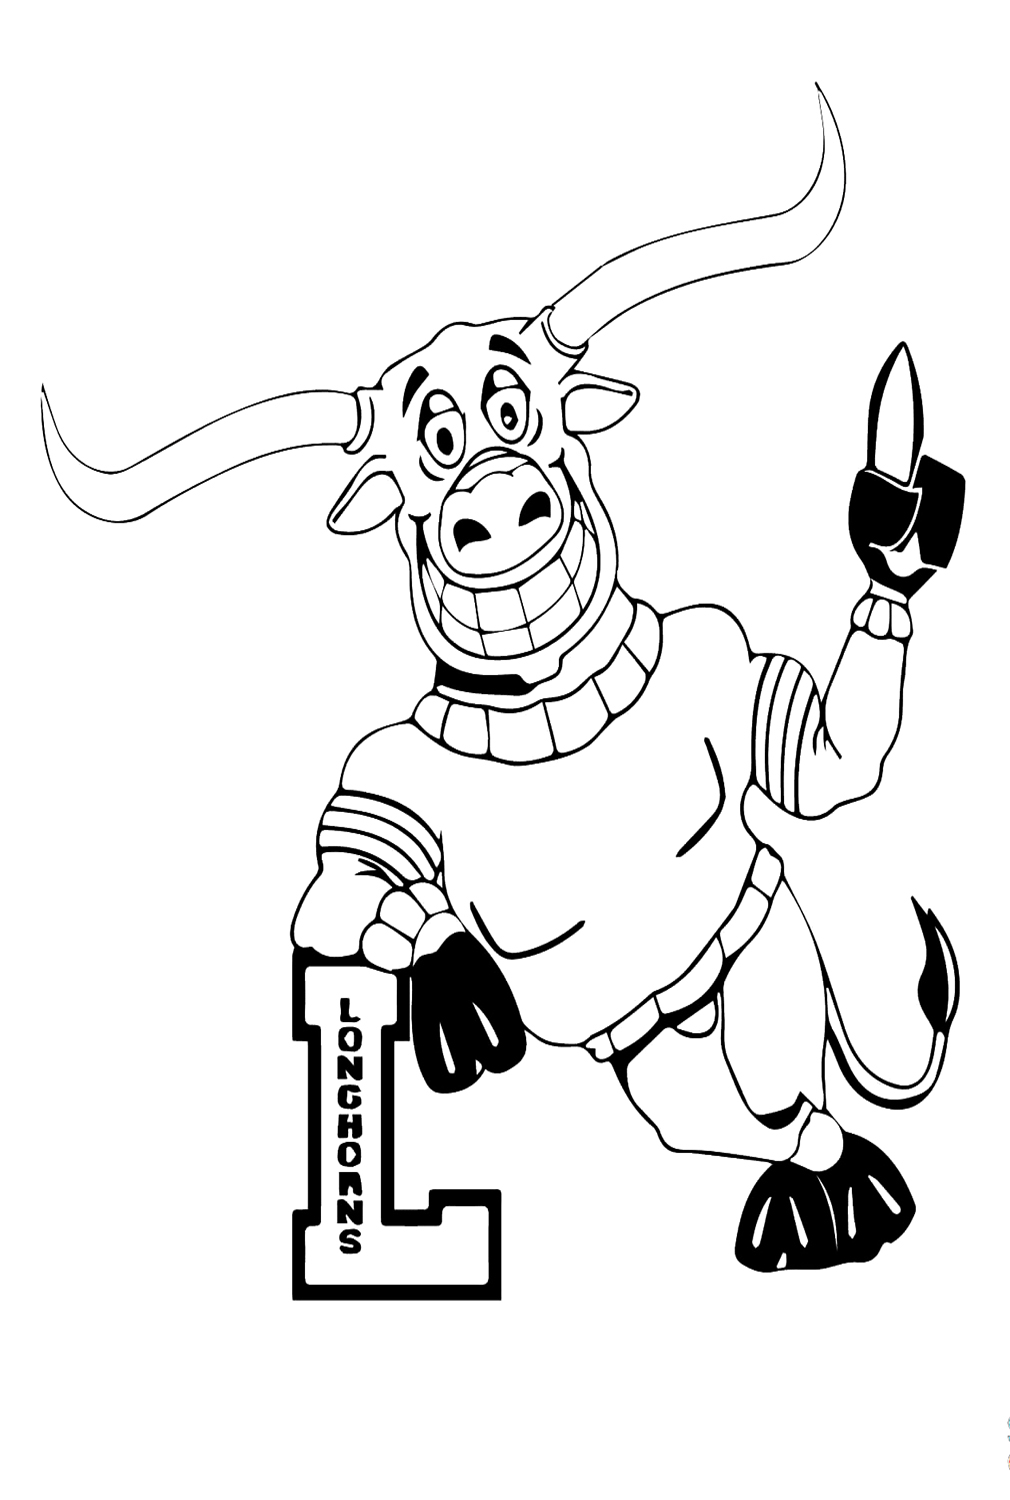 UT Longhorn Mascot Coloring Page